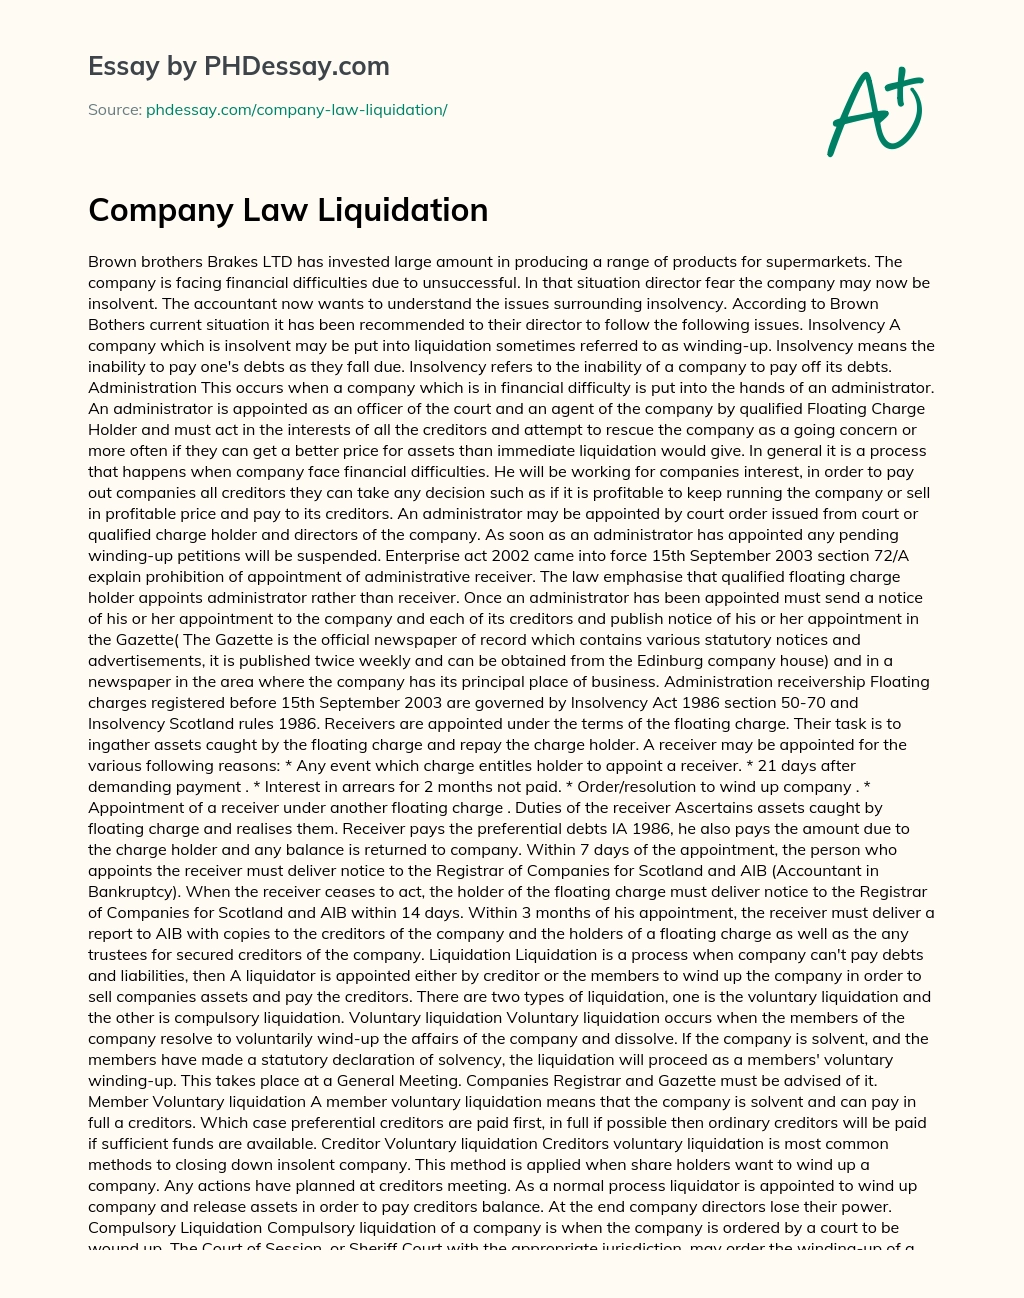 Company Law Liquidation essay